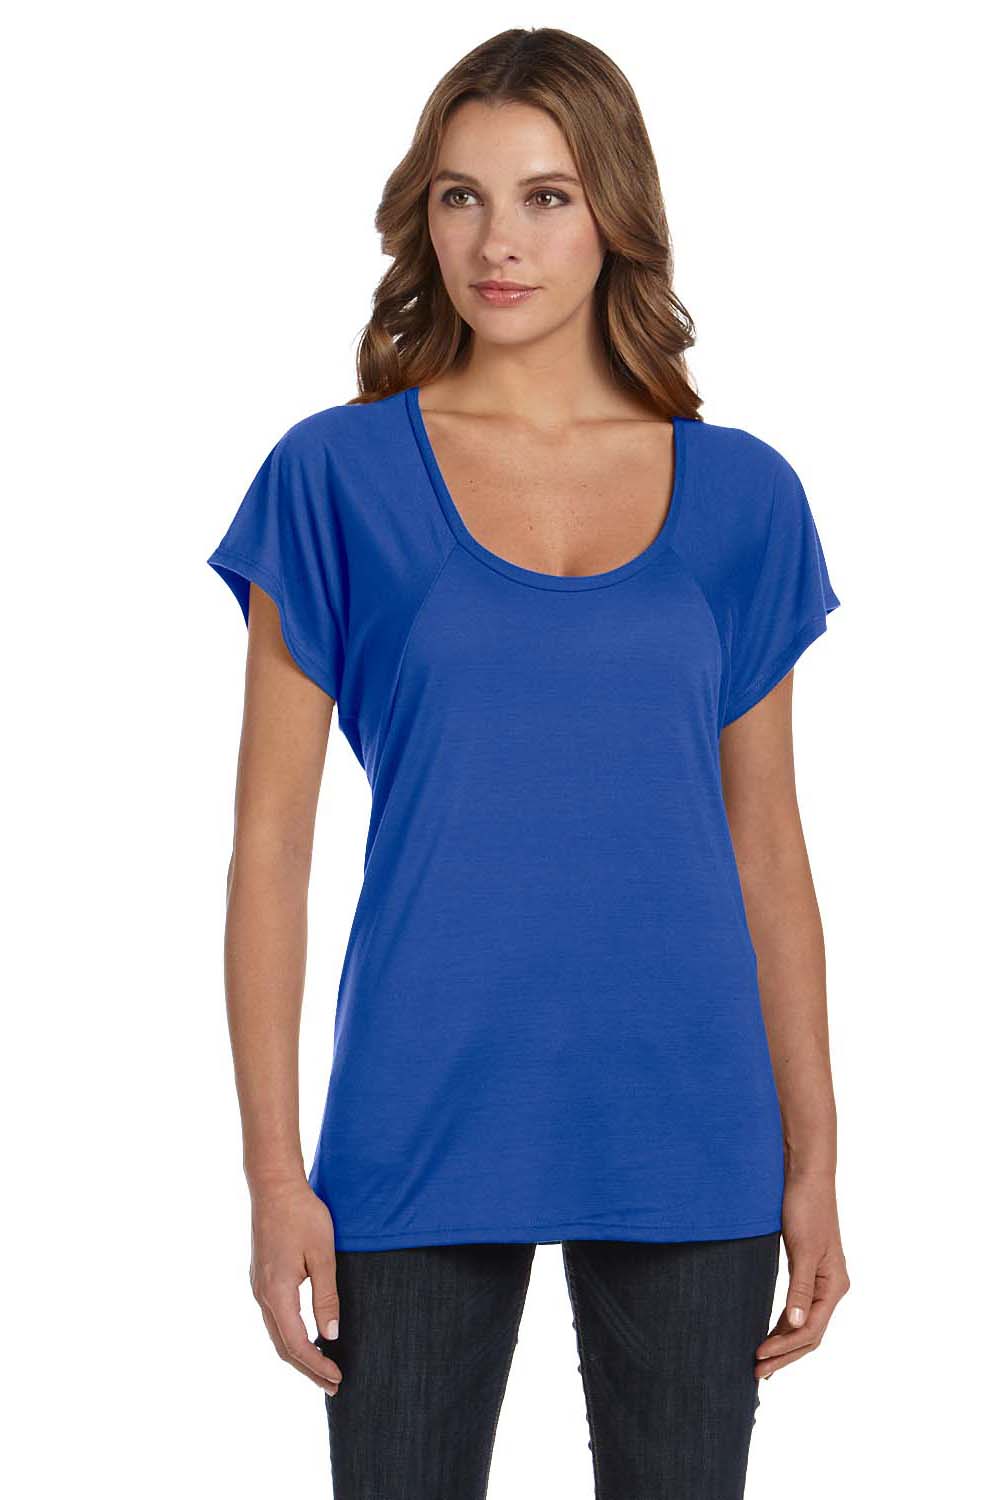 Bella + Canvas B8801 Womens Flowy Short Sleeve Scoop Neck T-Shirt Royal Blue Front